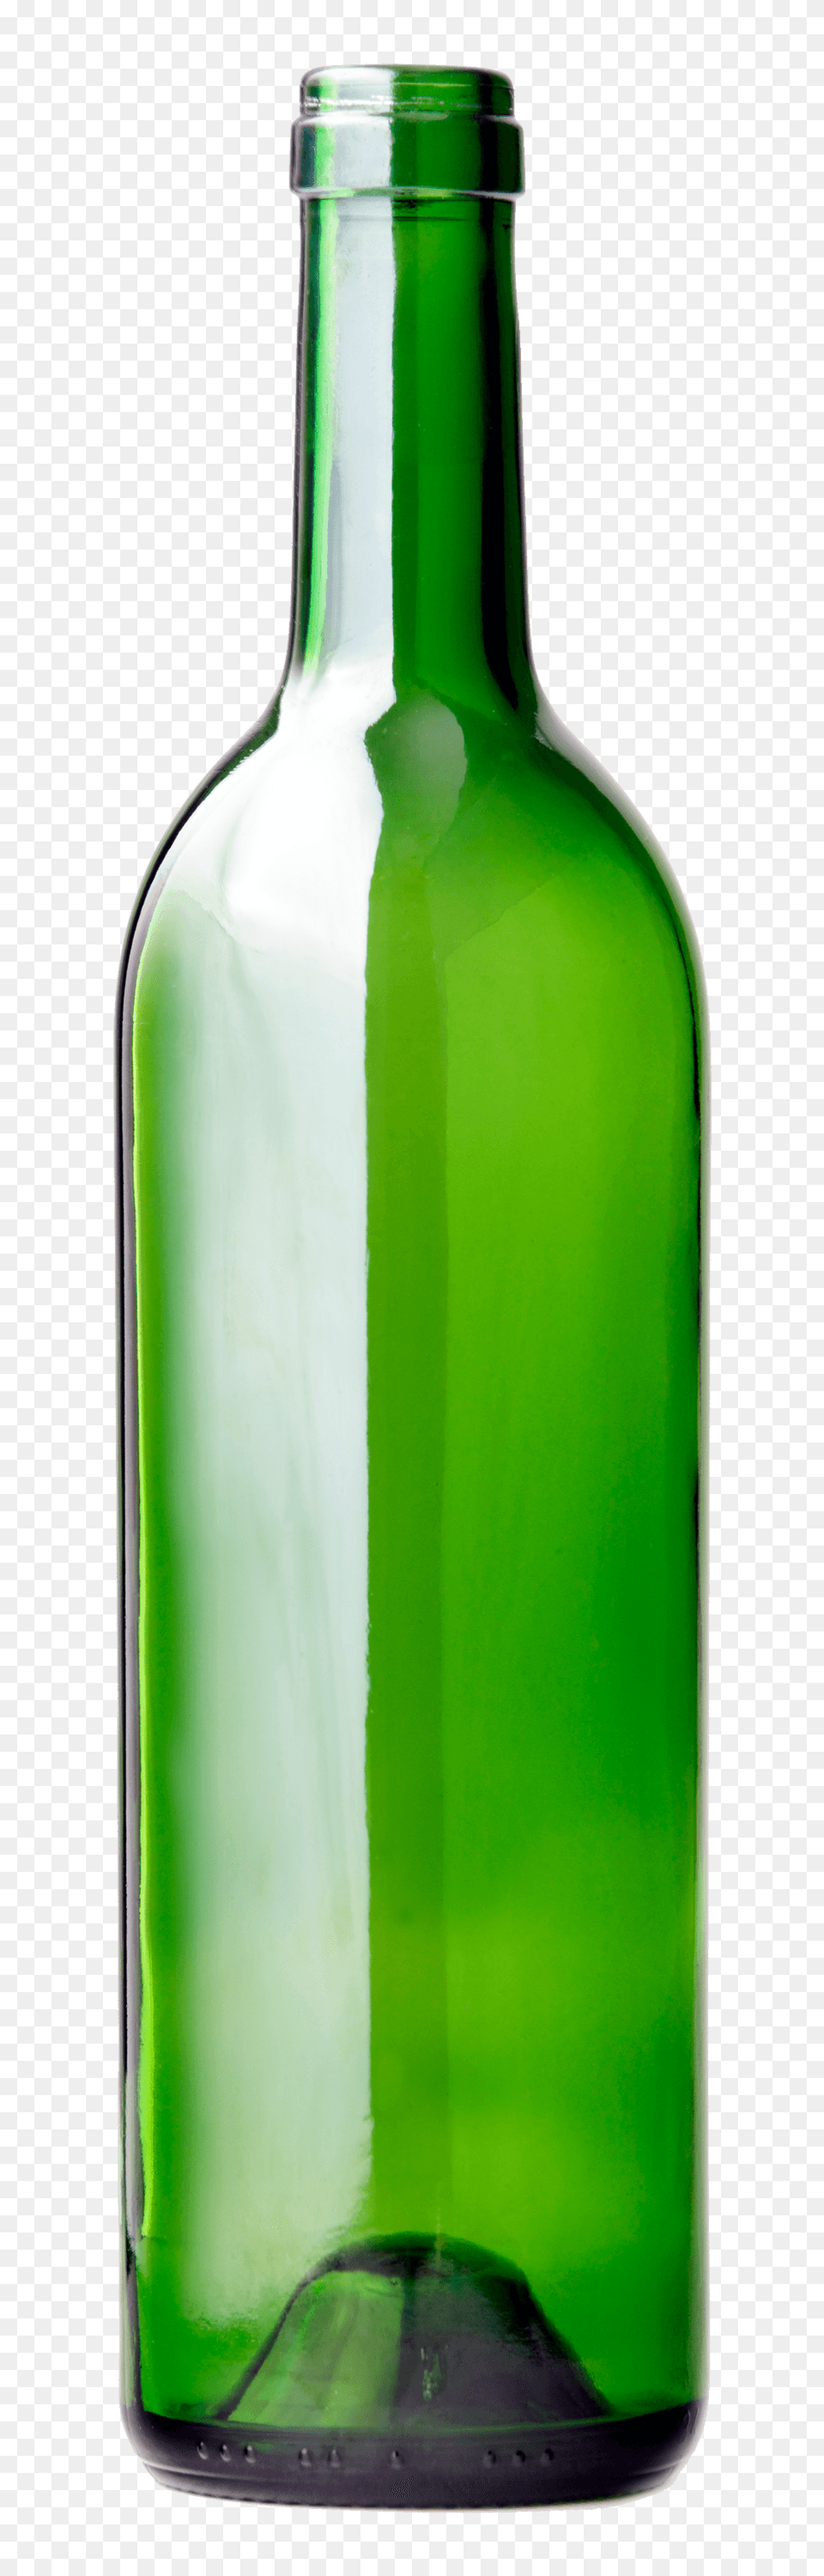 Bottle Long Green, Glass, Alcohol, Beverage, Liquor Free Transparent Png